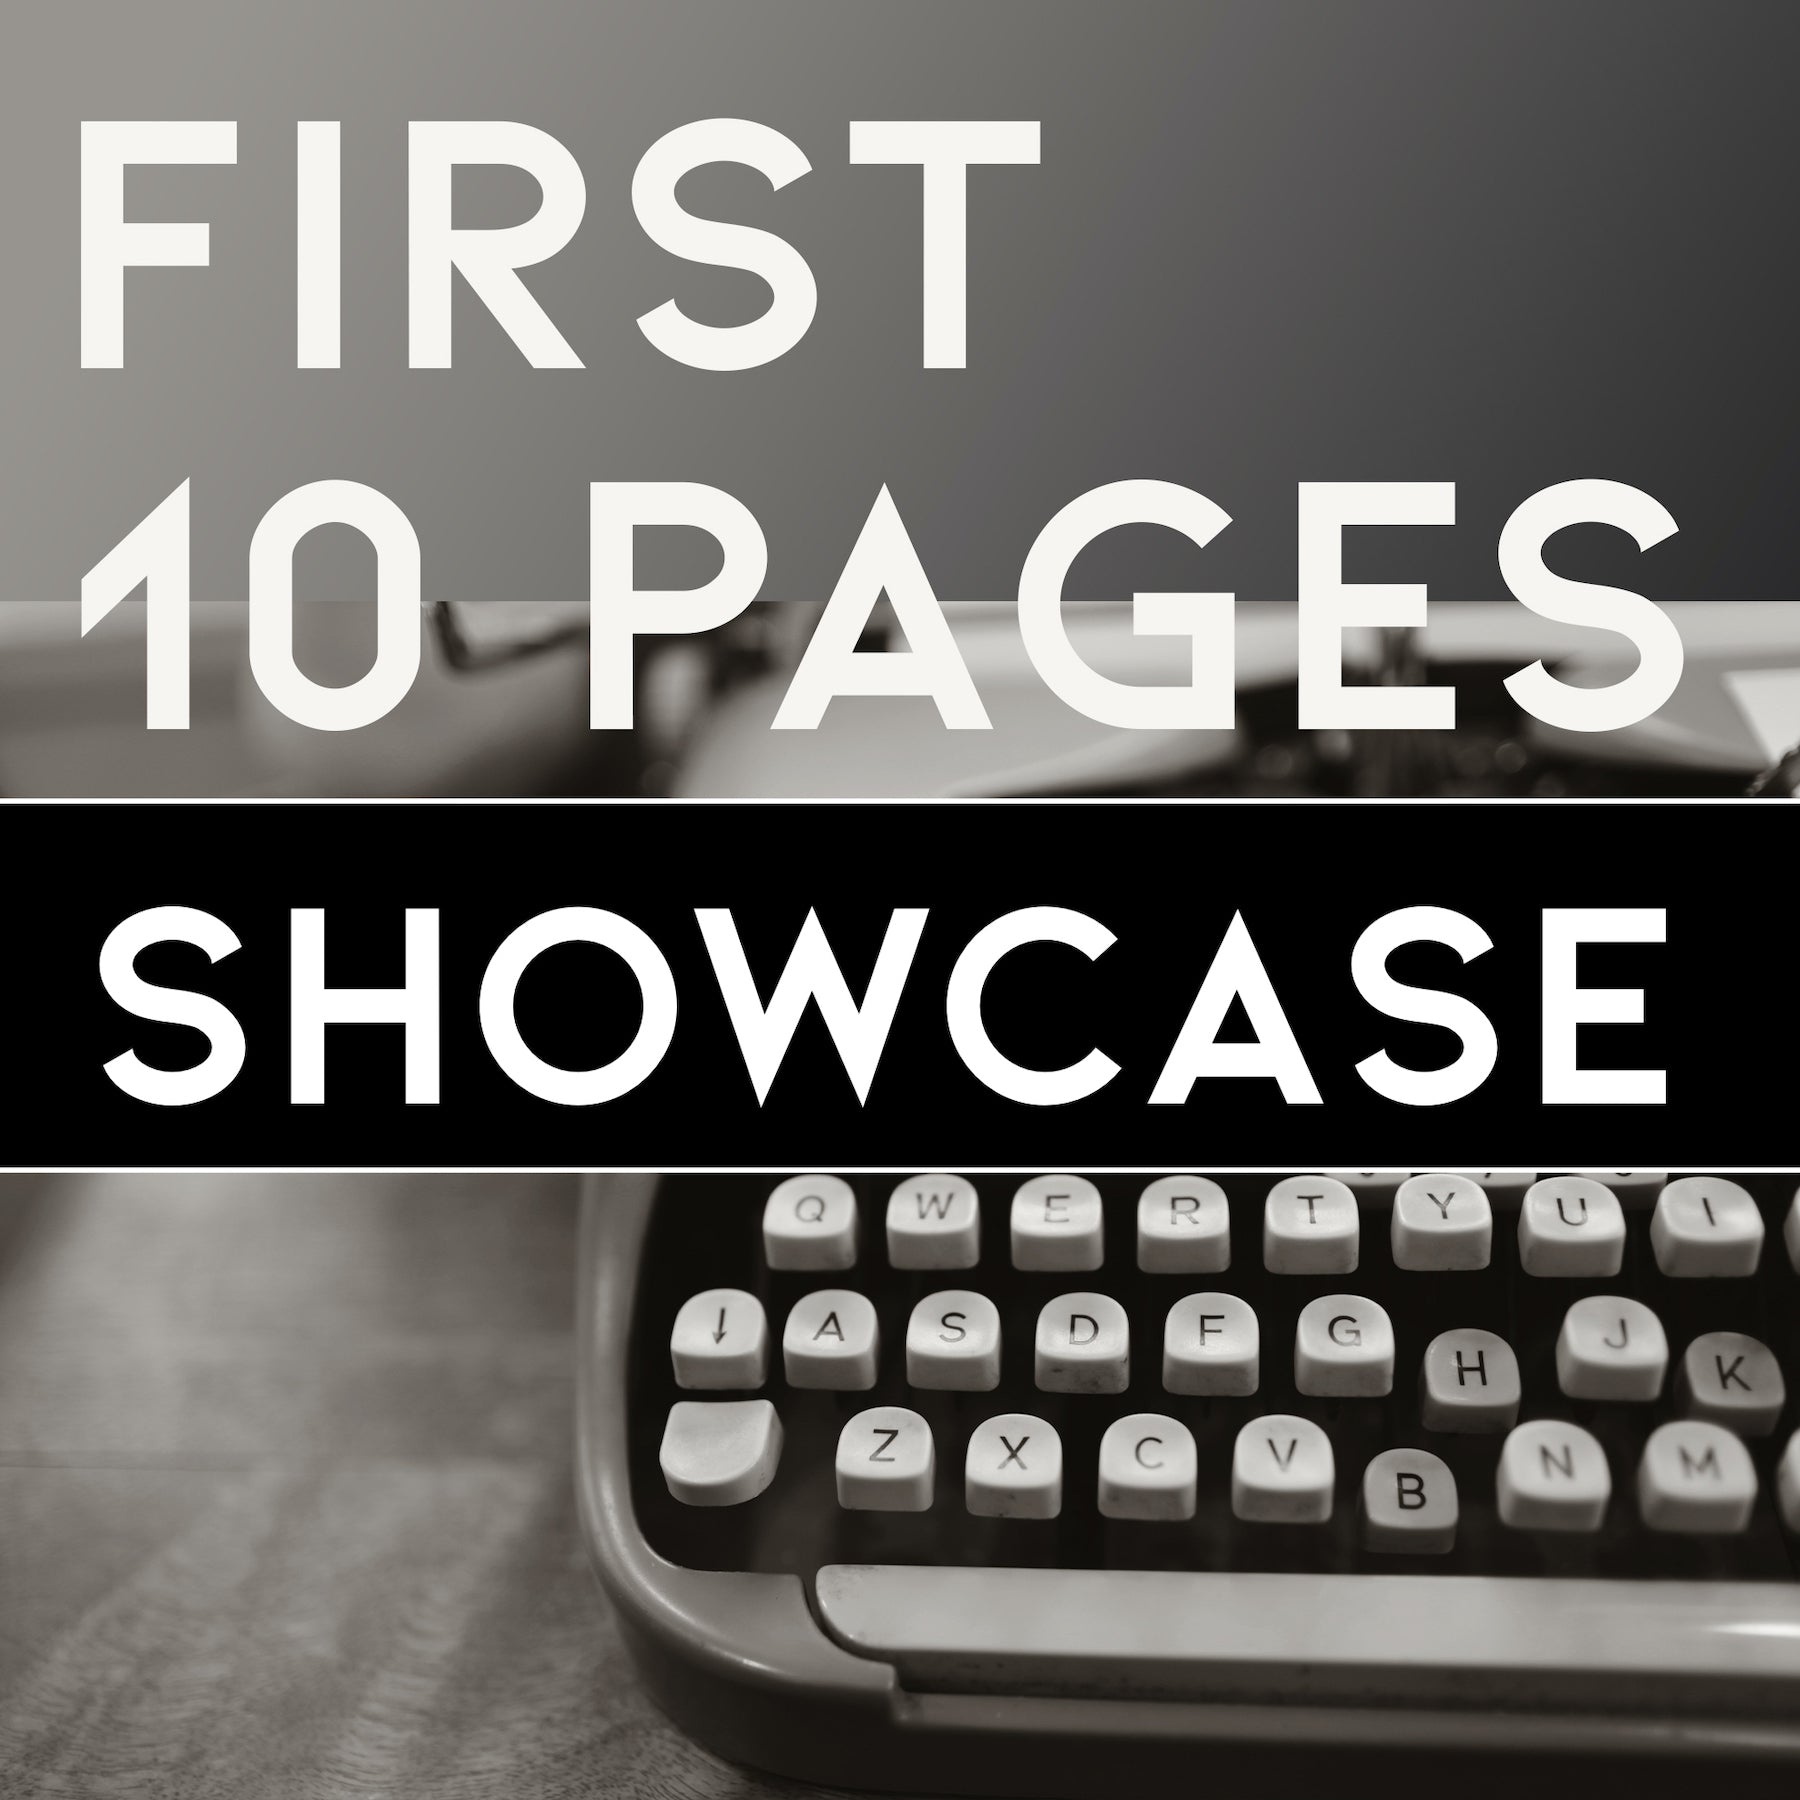 First 10 Pages Showcase Icon - Retro Typewriter